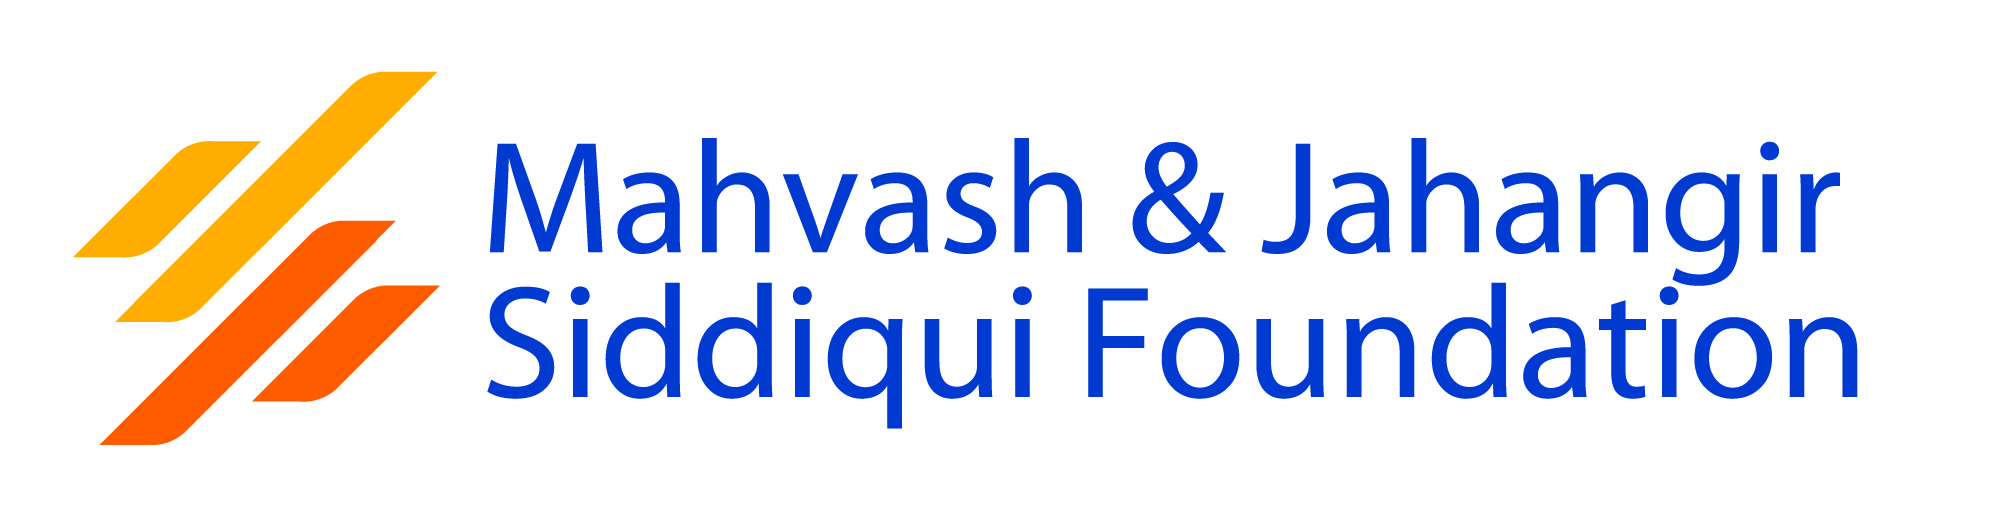 Mahvash & Jahangir Siddiqui Foundation